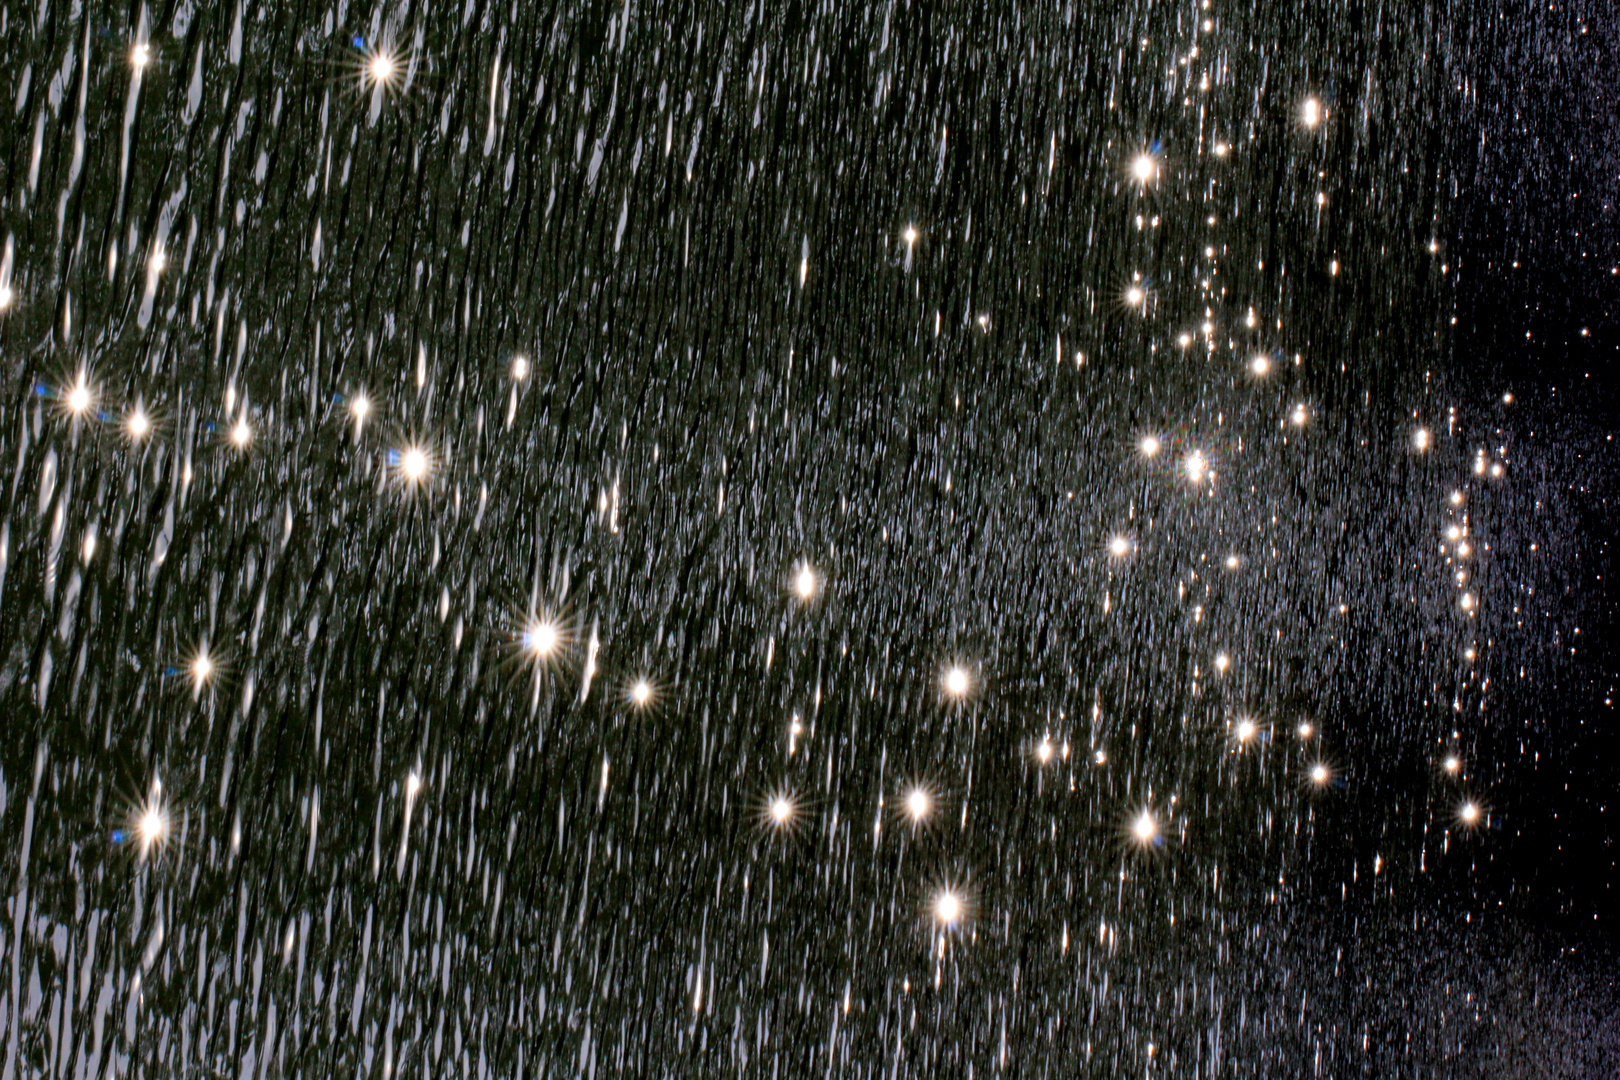 Sterne im Regen :-))